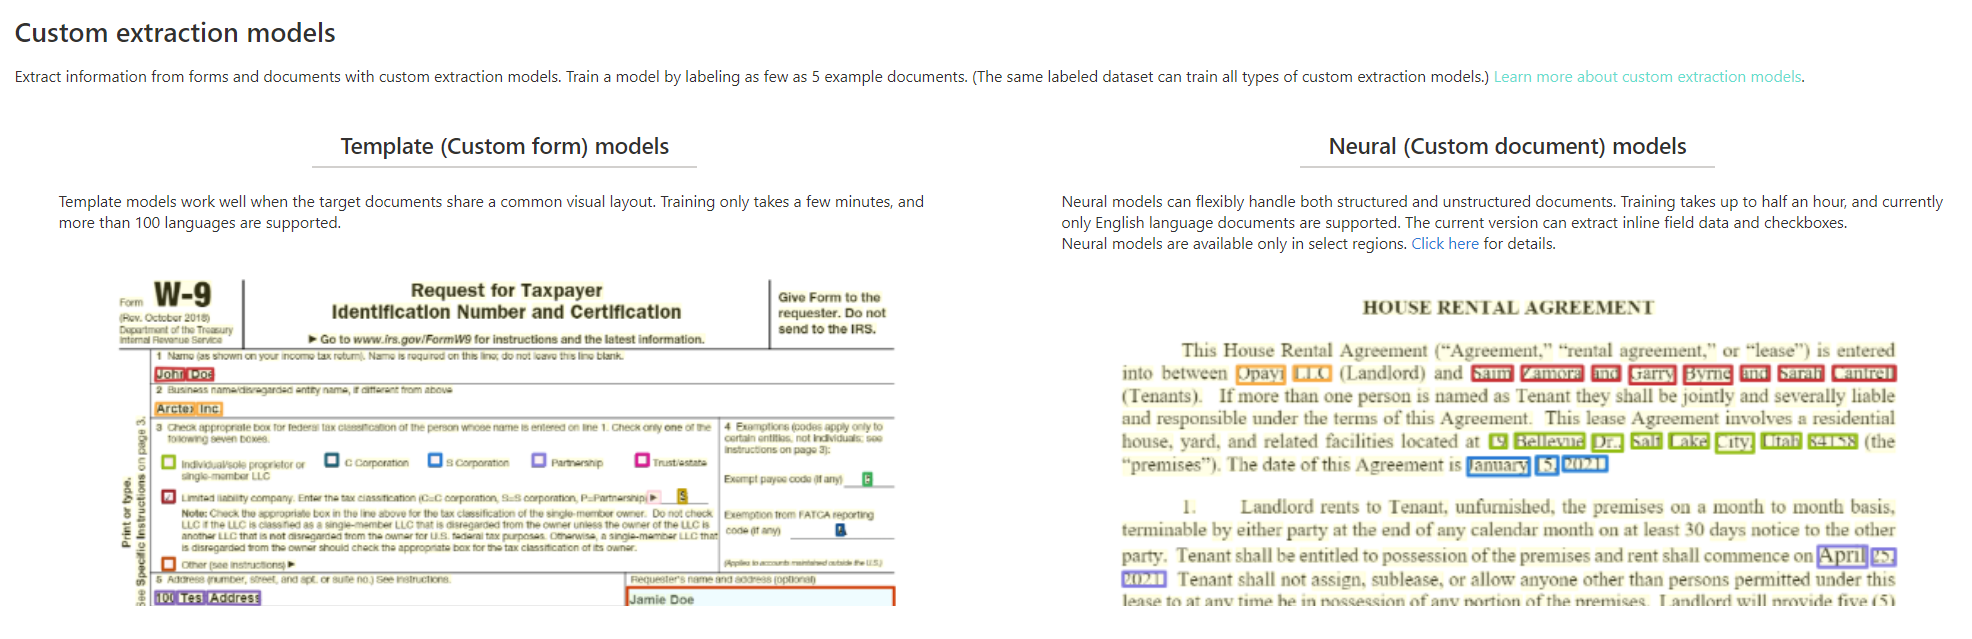 Screenshot of custom extraction model analysis in Document Intelligence Studio.